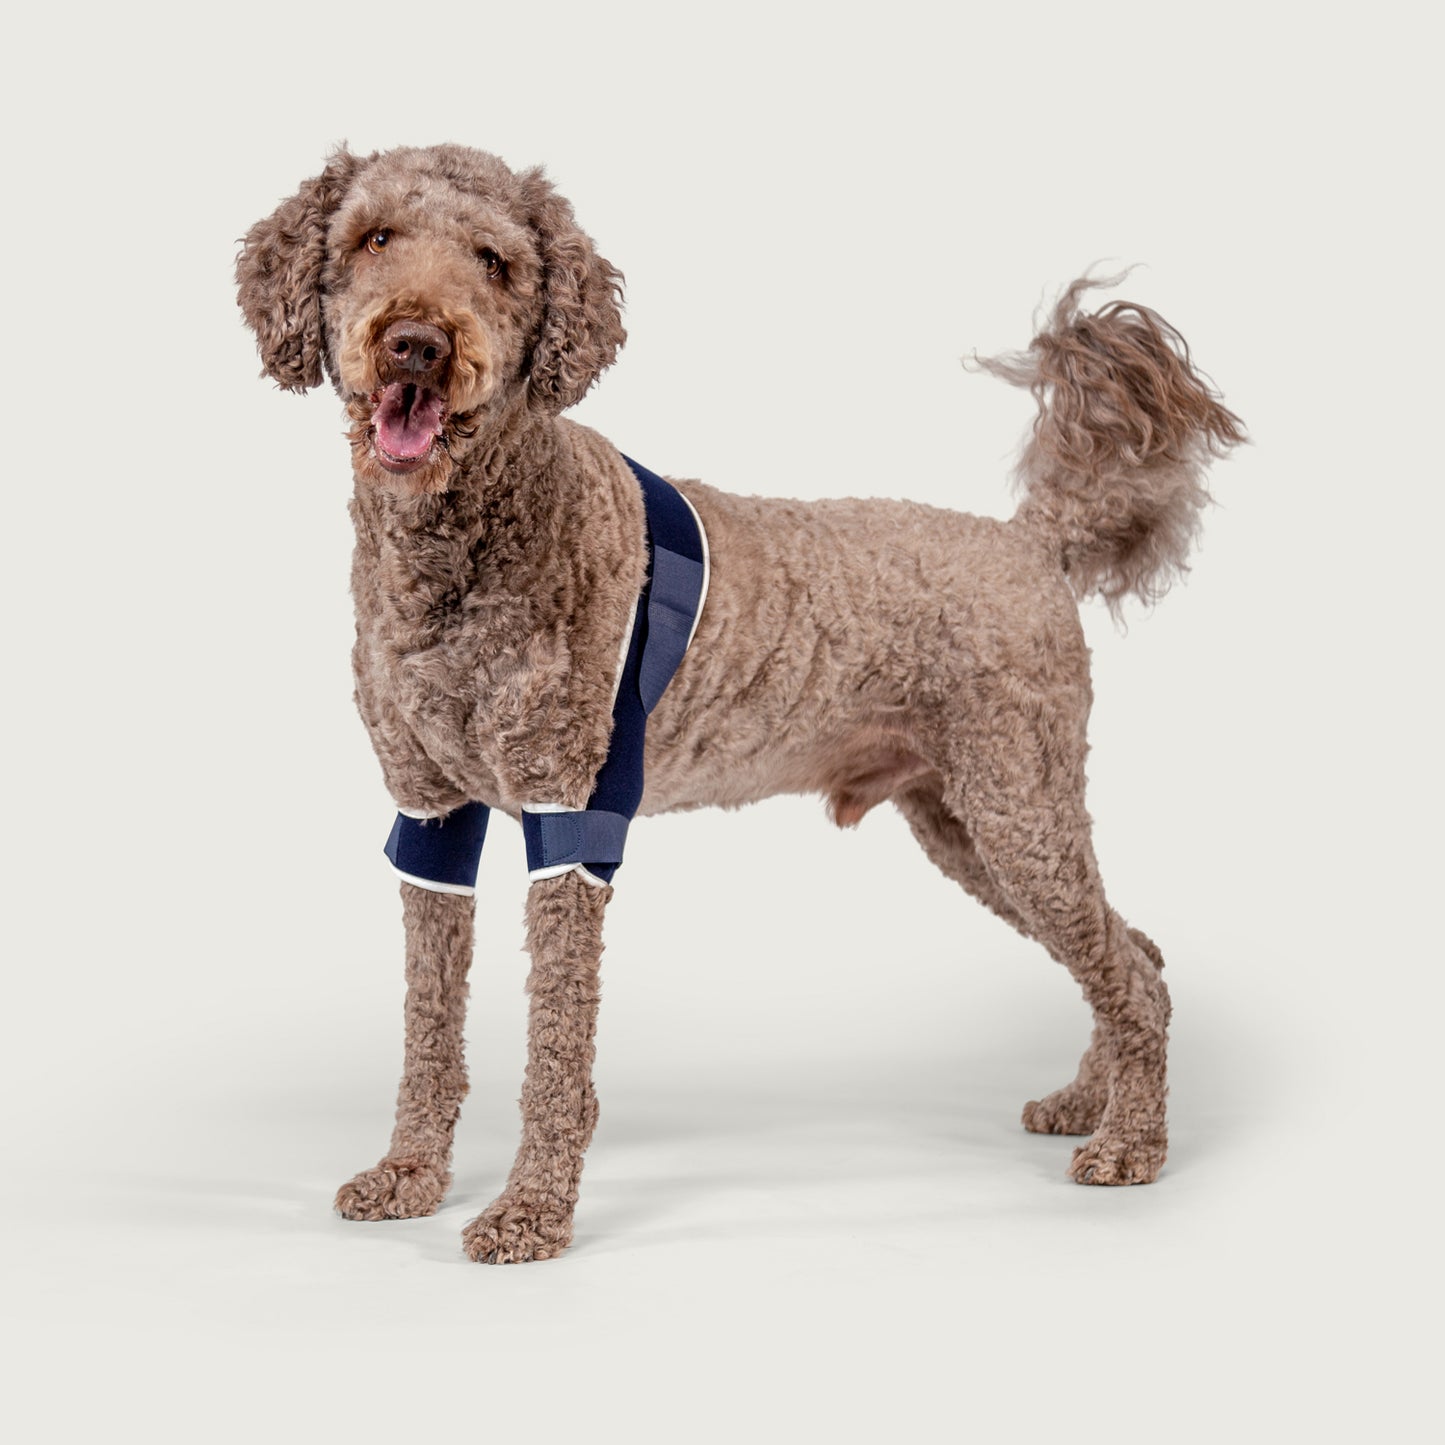 balto soft plus shoulder brace as shown on dog smiling